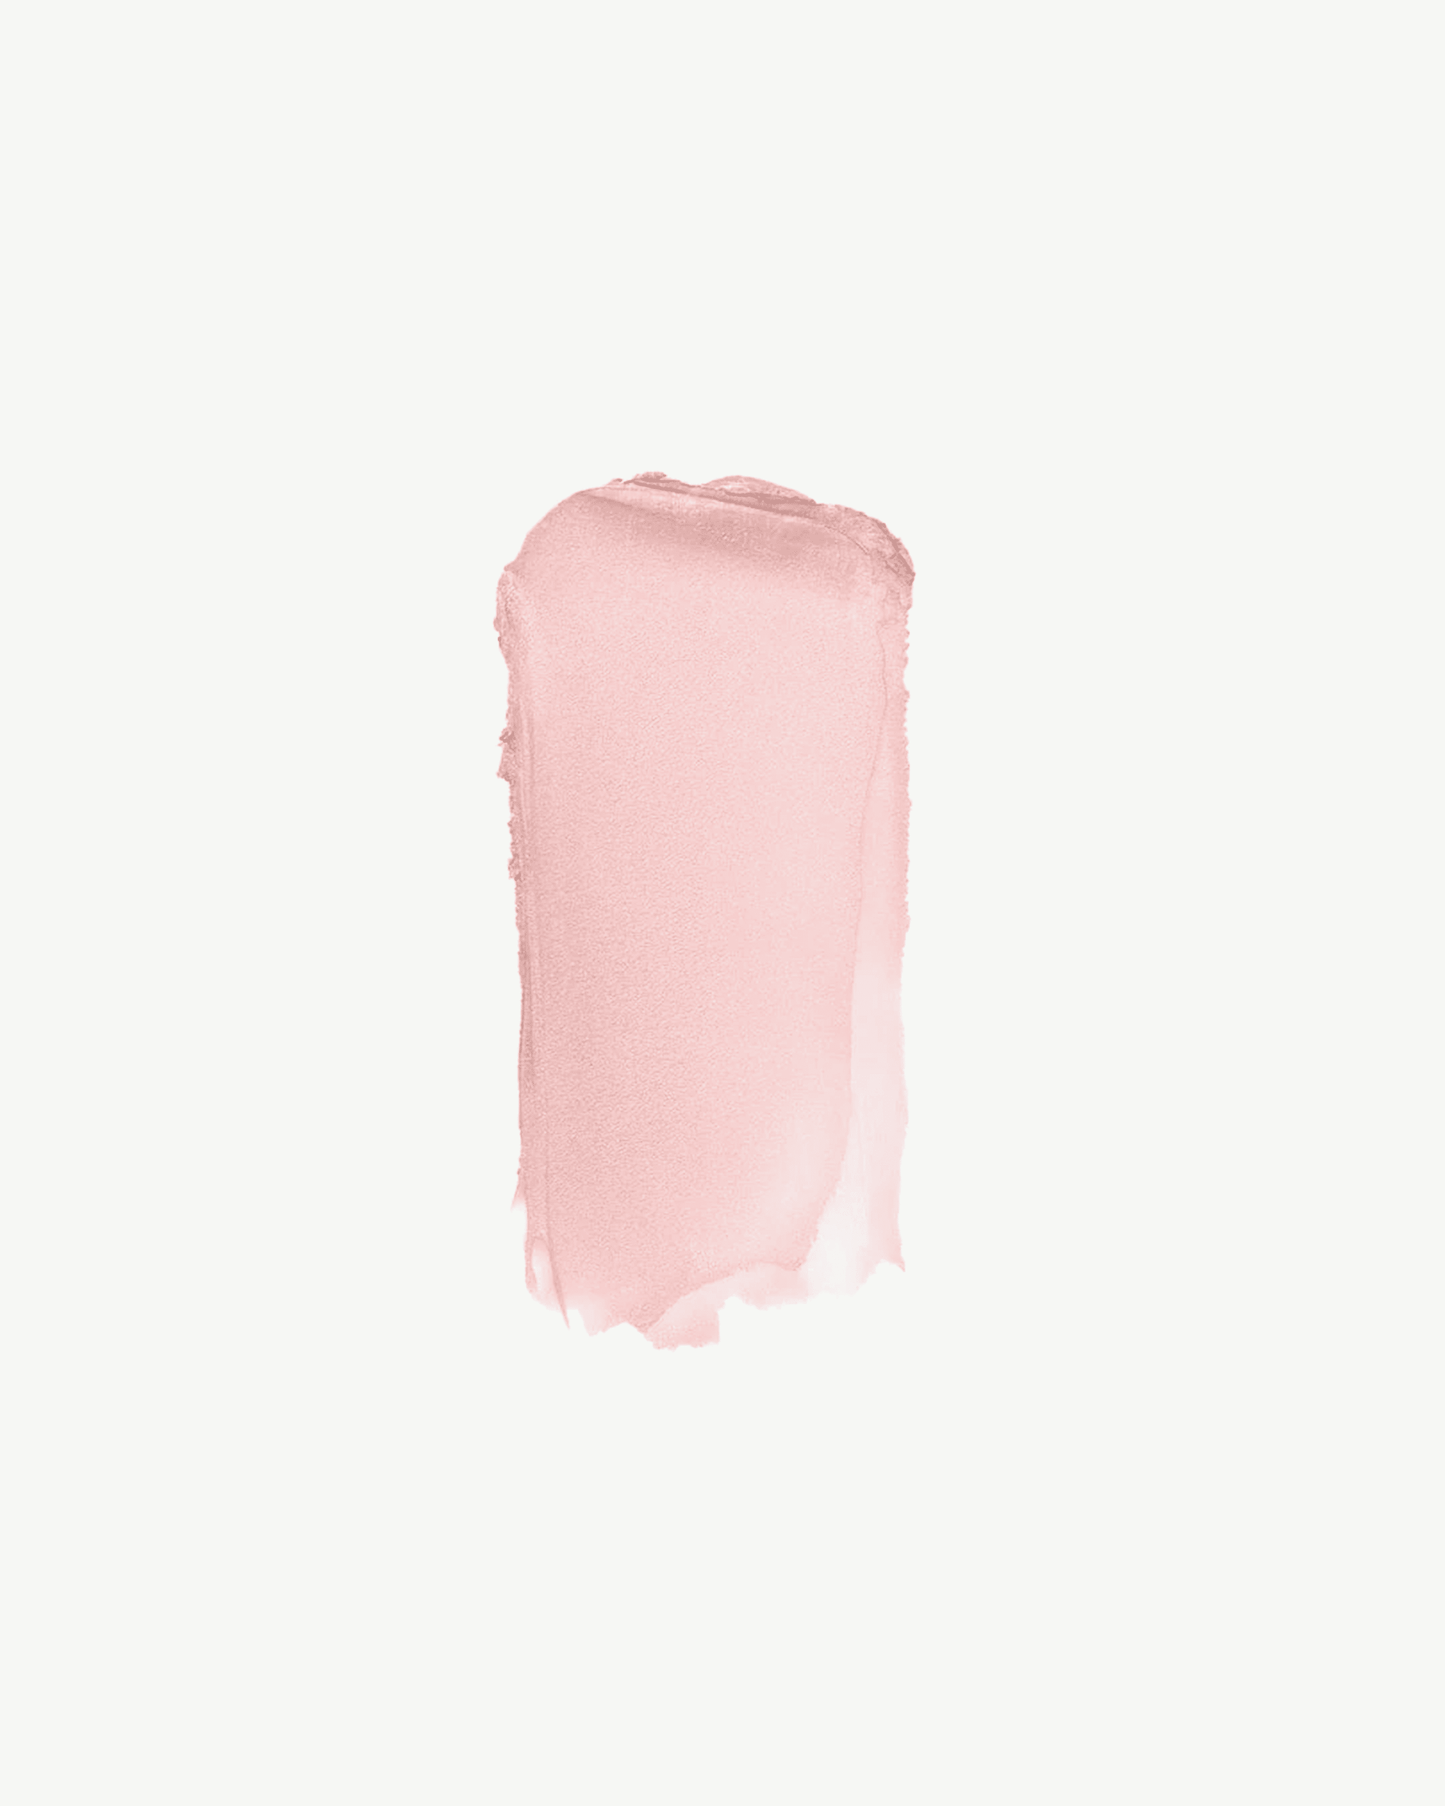 M88 (softest dusty pink)